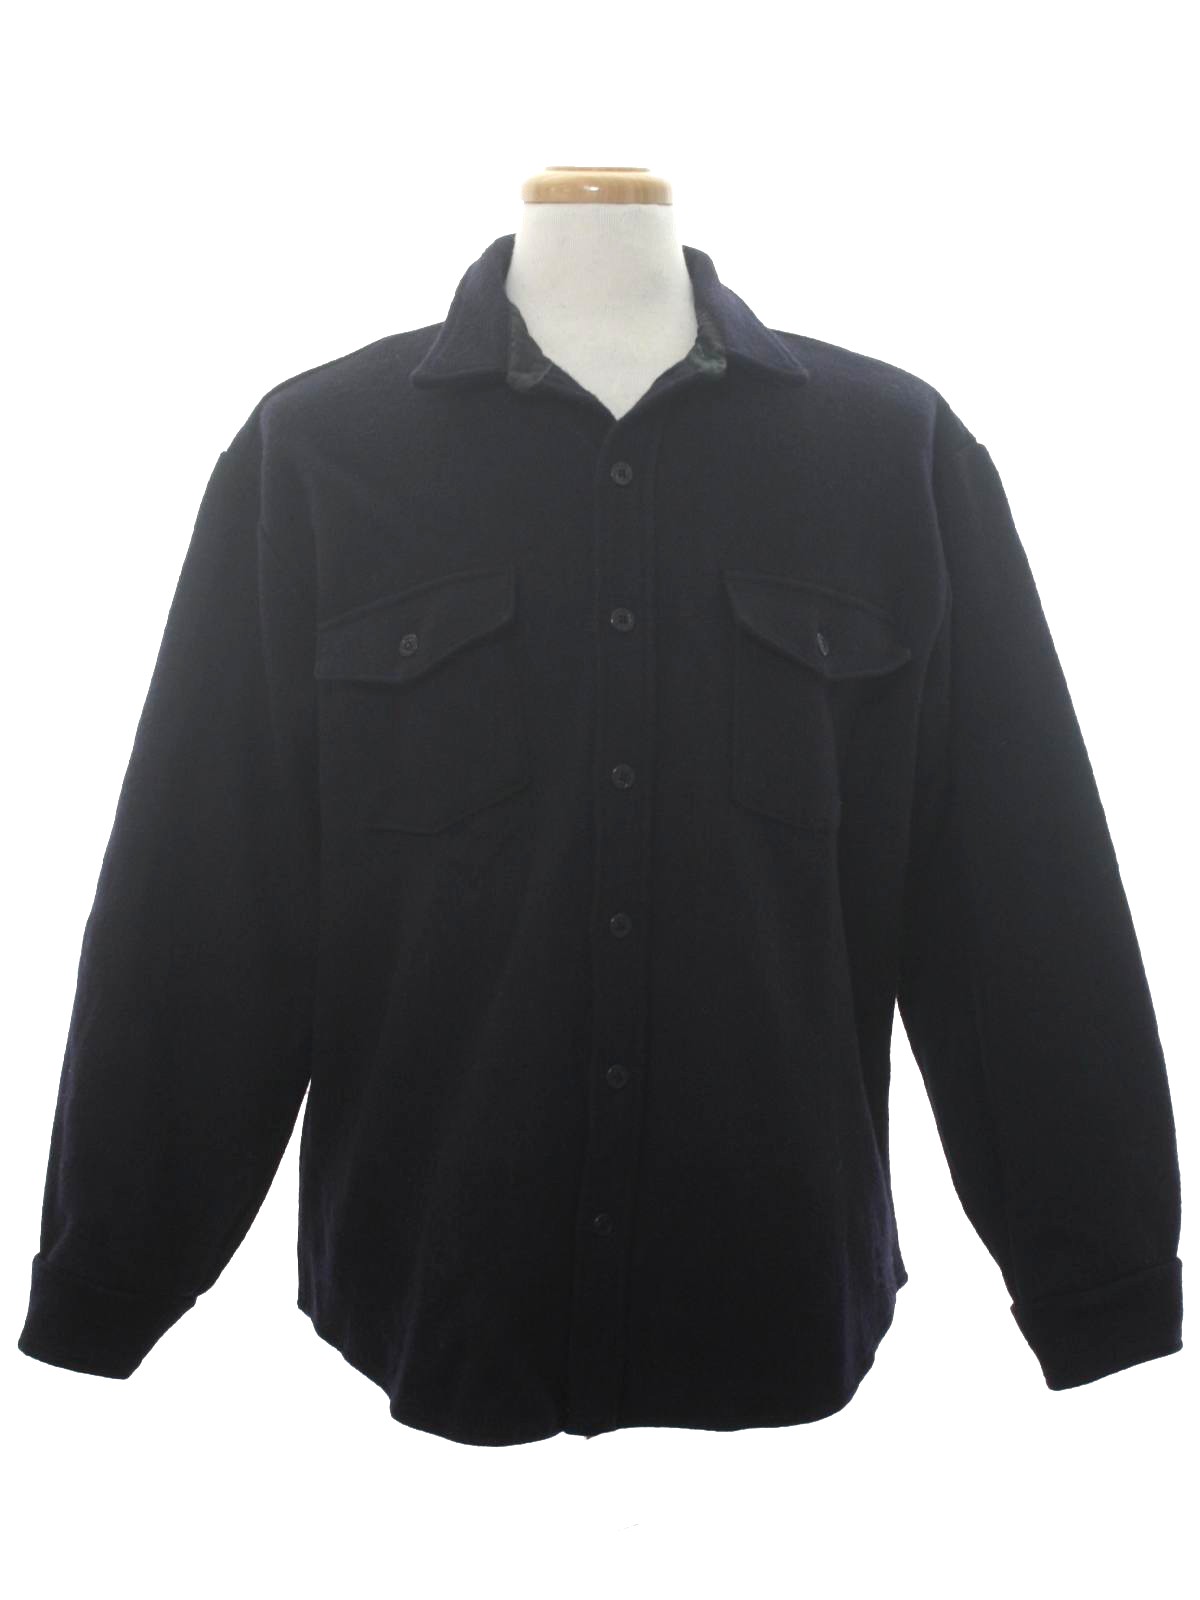 Retro 80's Jacket: 80s -Codet- Mens dark navy blue wool blend CPO ...